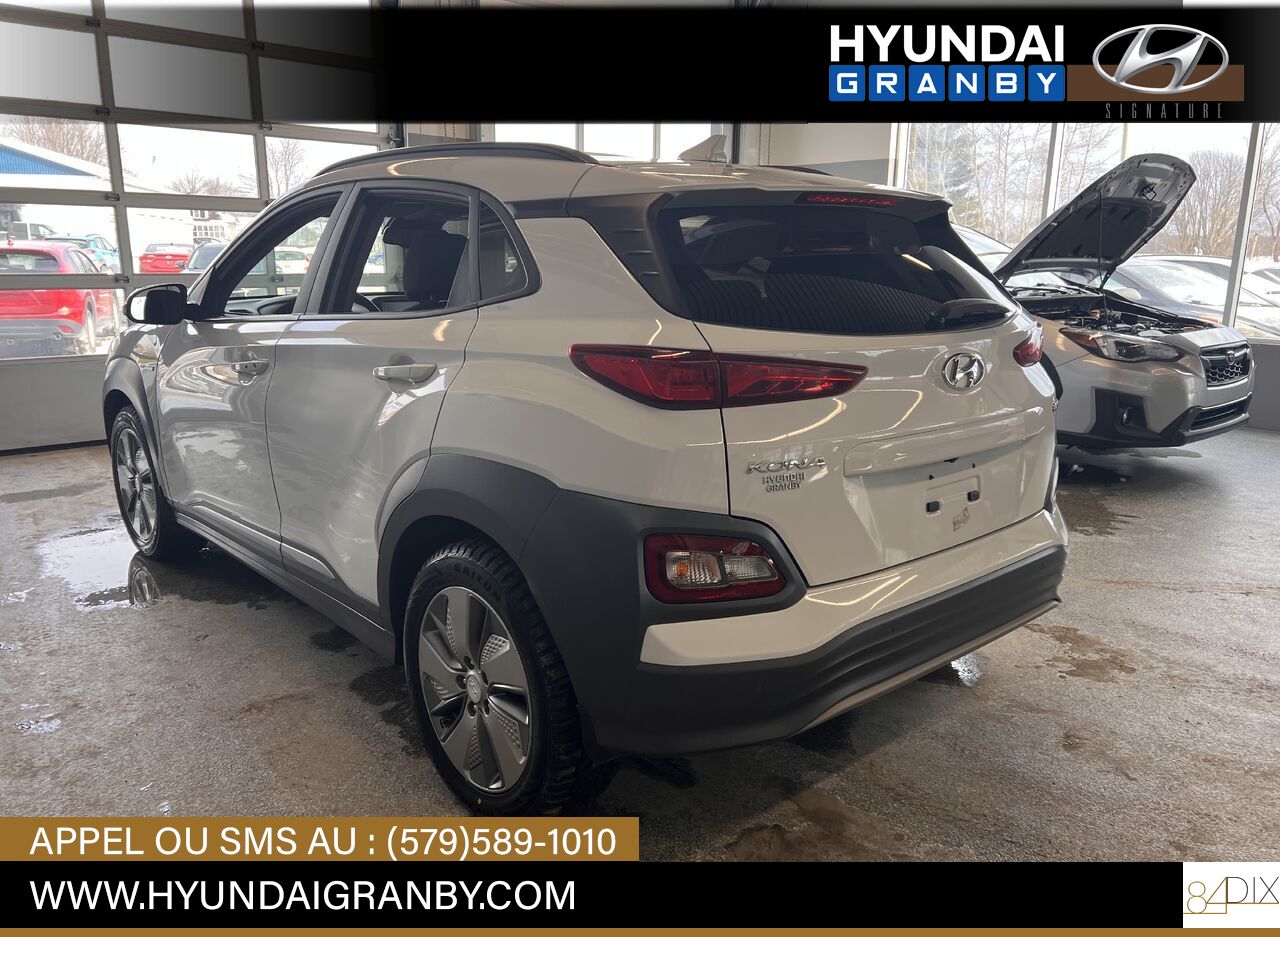 2019 Hyundai Kona électrique Granby - photo #3